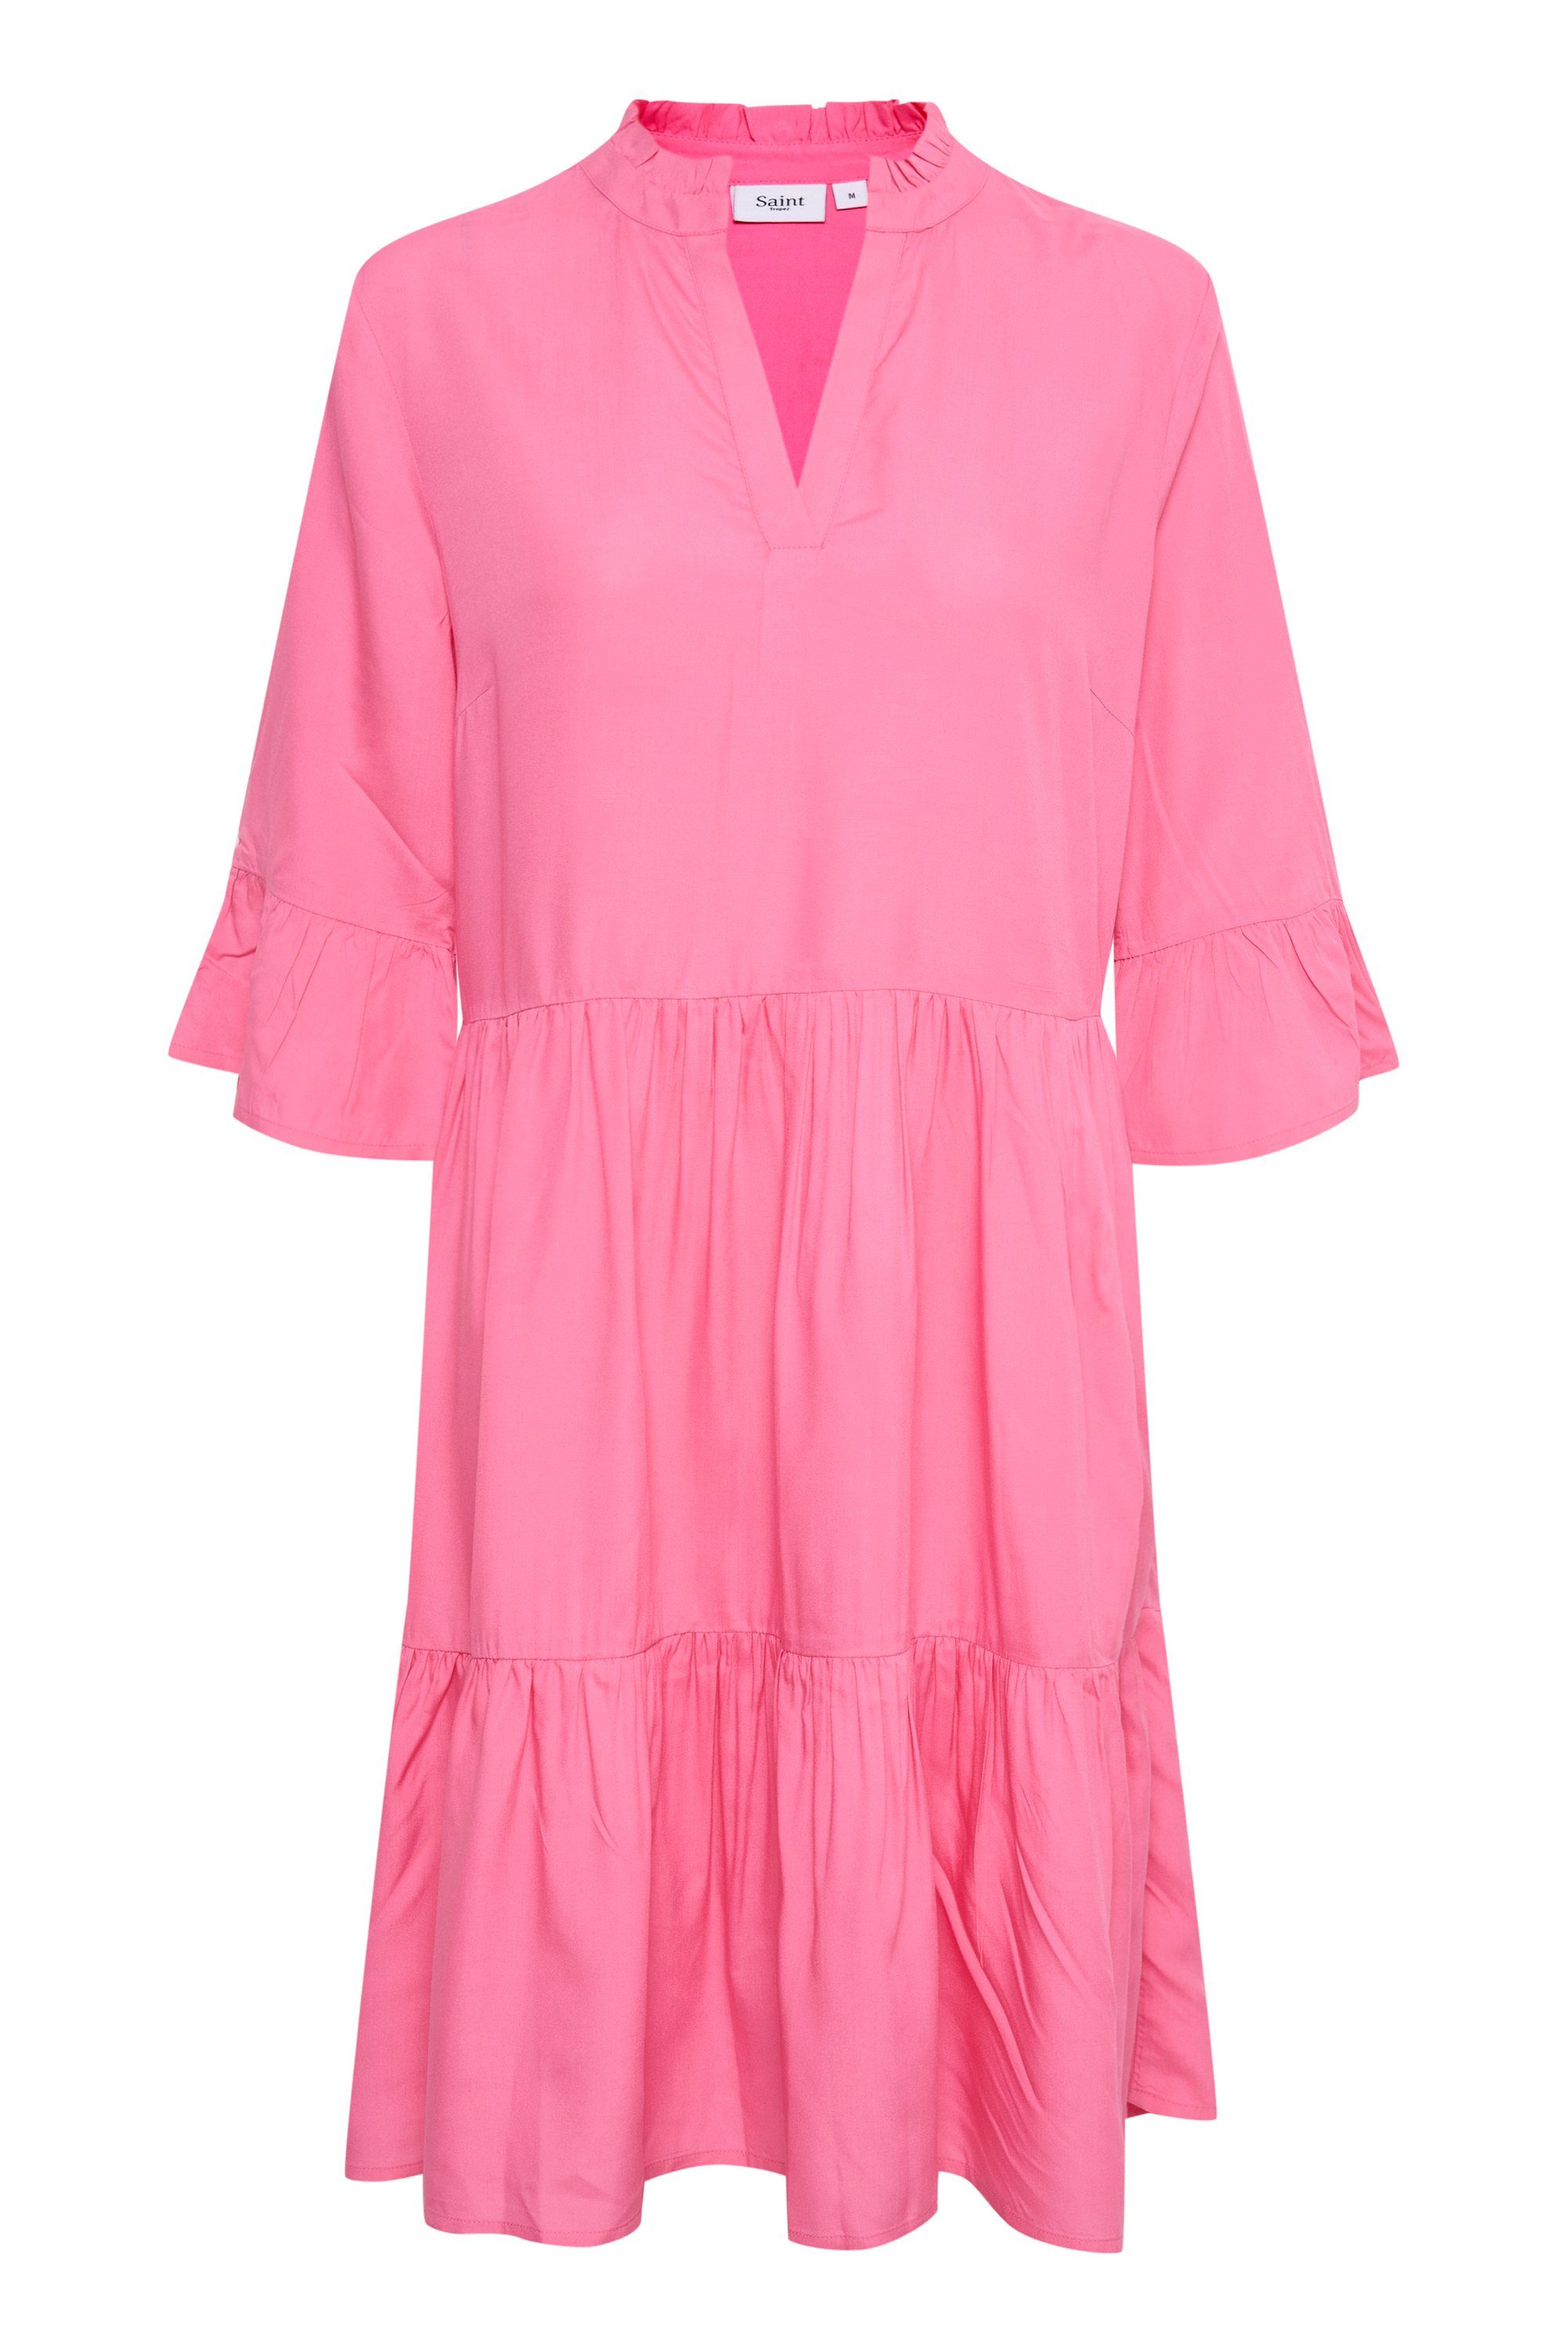 Saint Tropez Jerseykleid EdaSZ Kleid Pink Azalea